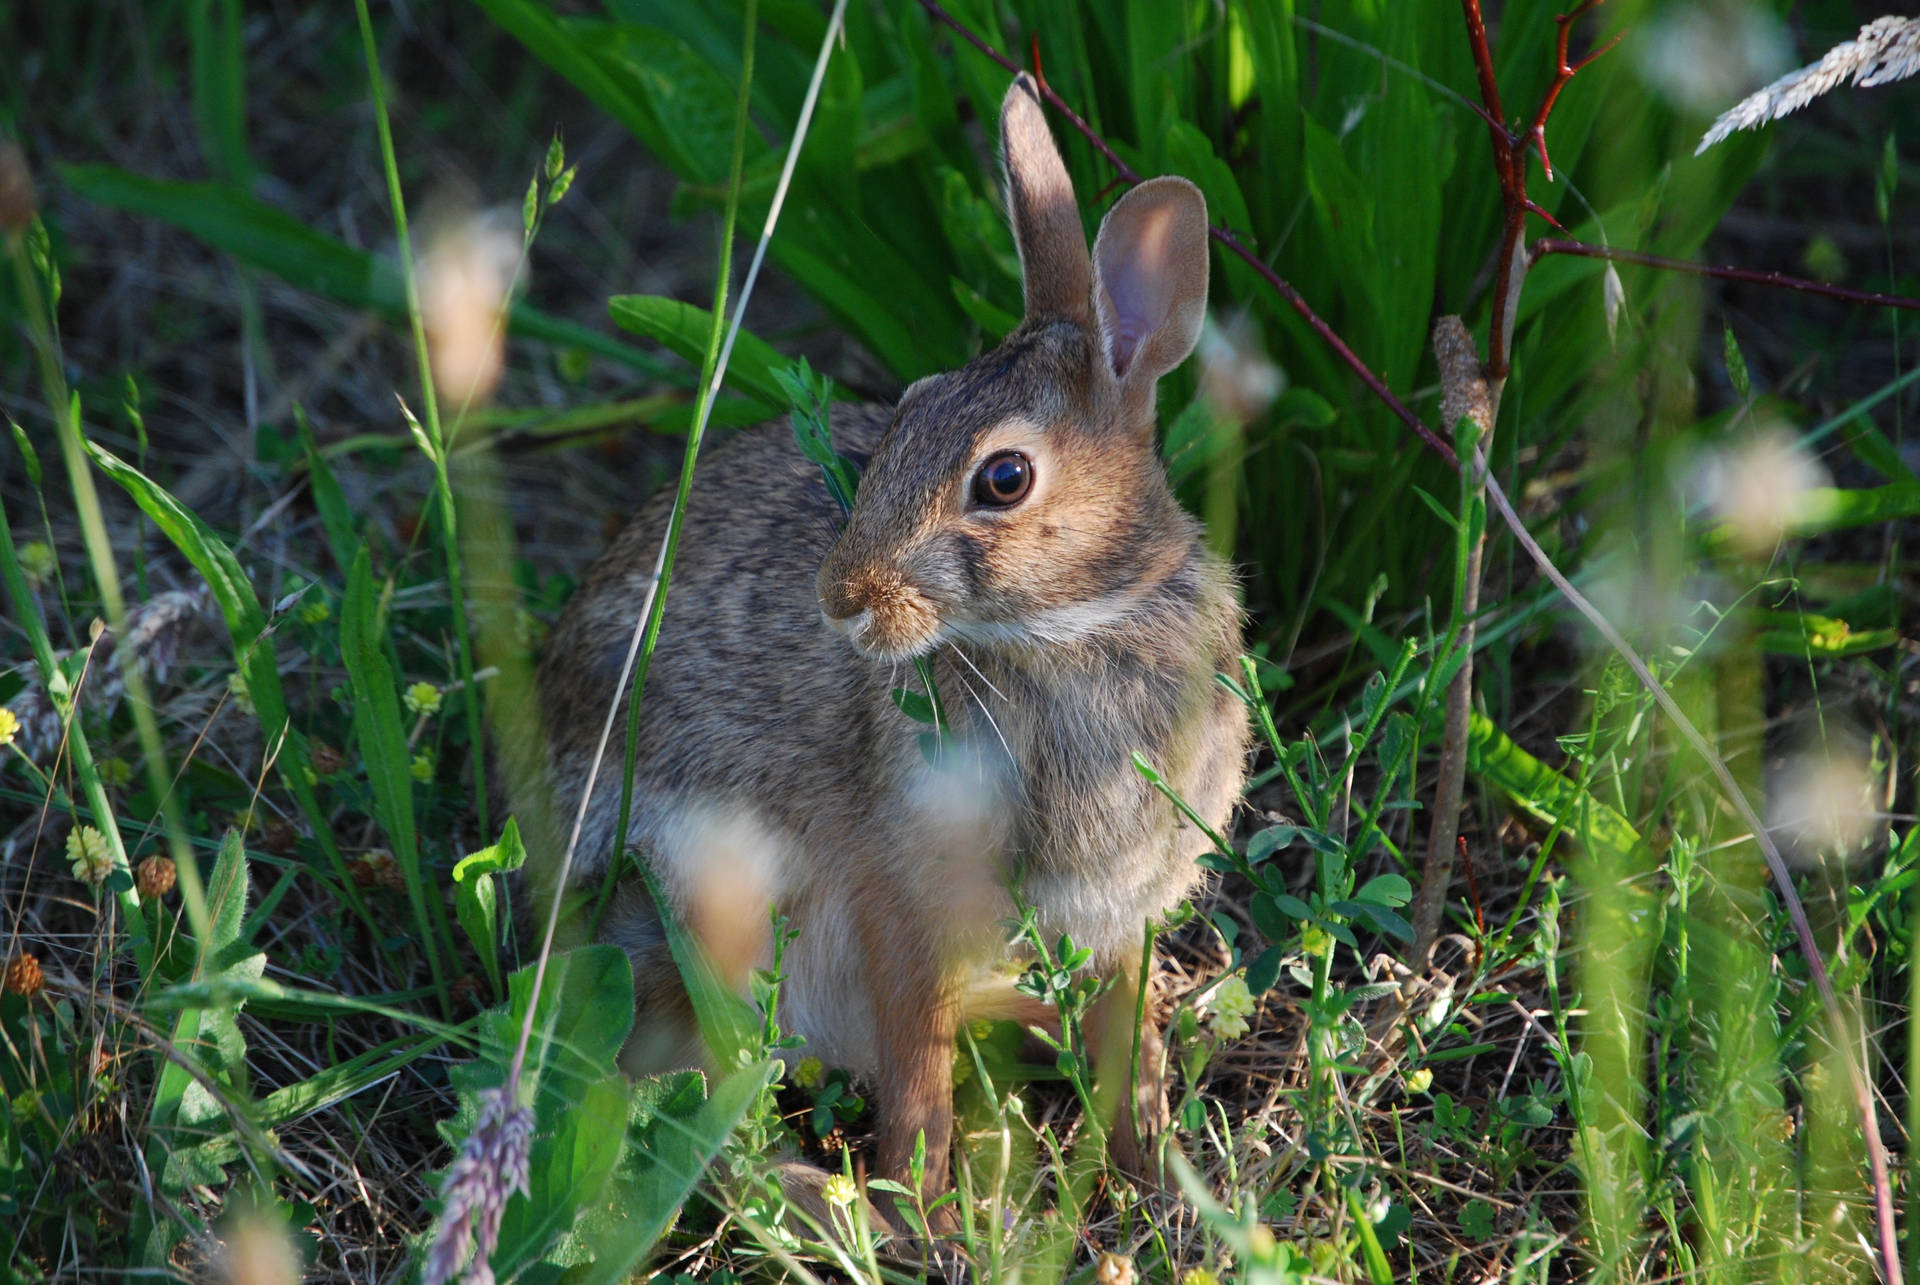 Adult Rabbit Looking